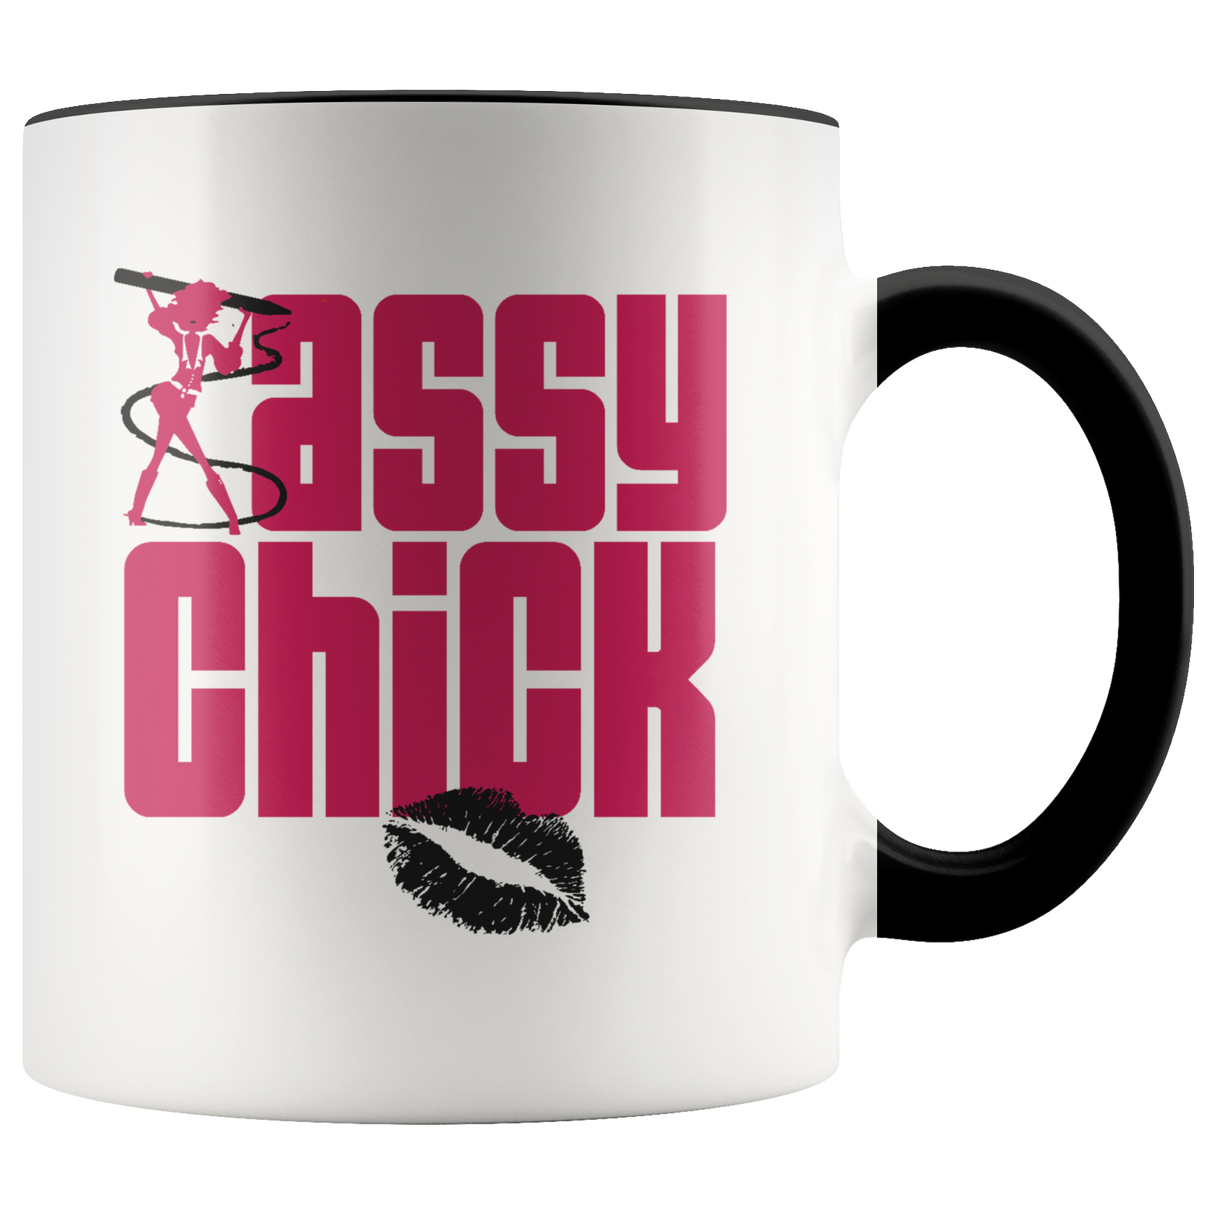 Mug Sassy Chick Coffee Mug - Black | Shop Sassy Chick